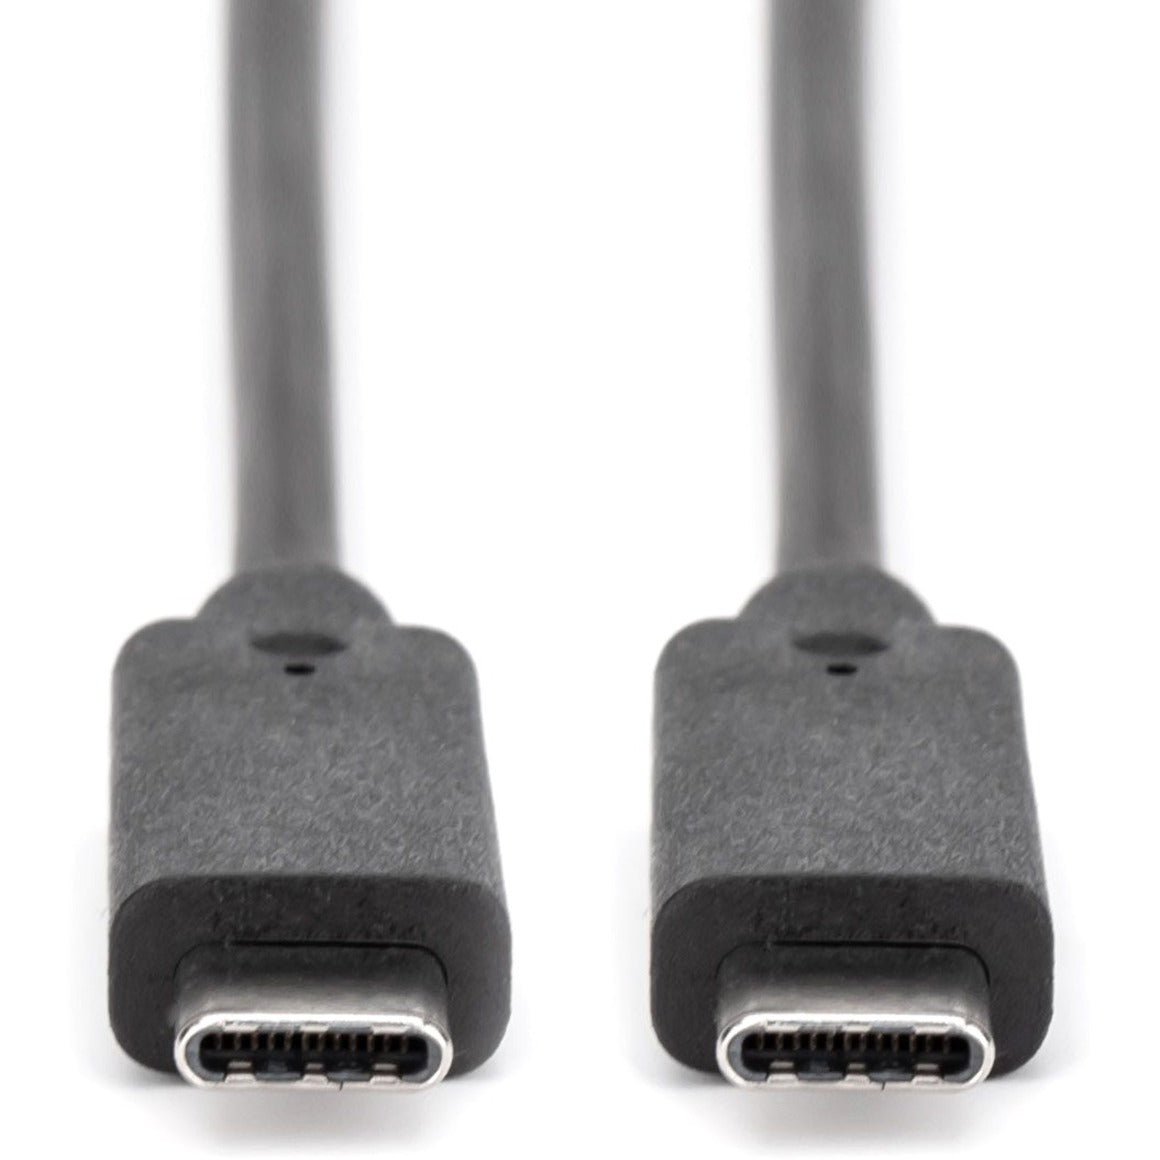 Rocstor Y10C148-B1 Premium USB Data Transfer Cable, 3ft, USB 3.1 Gen2 10GB, Reversible, Black